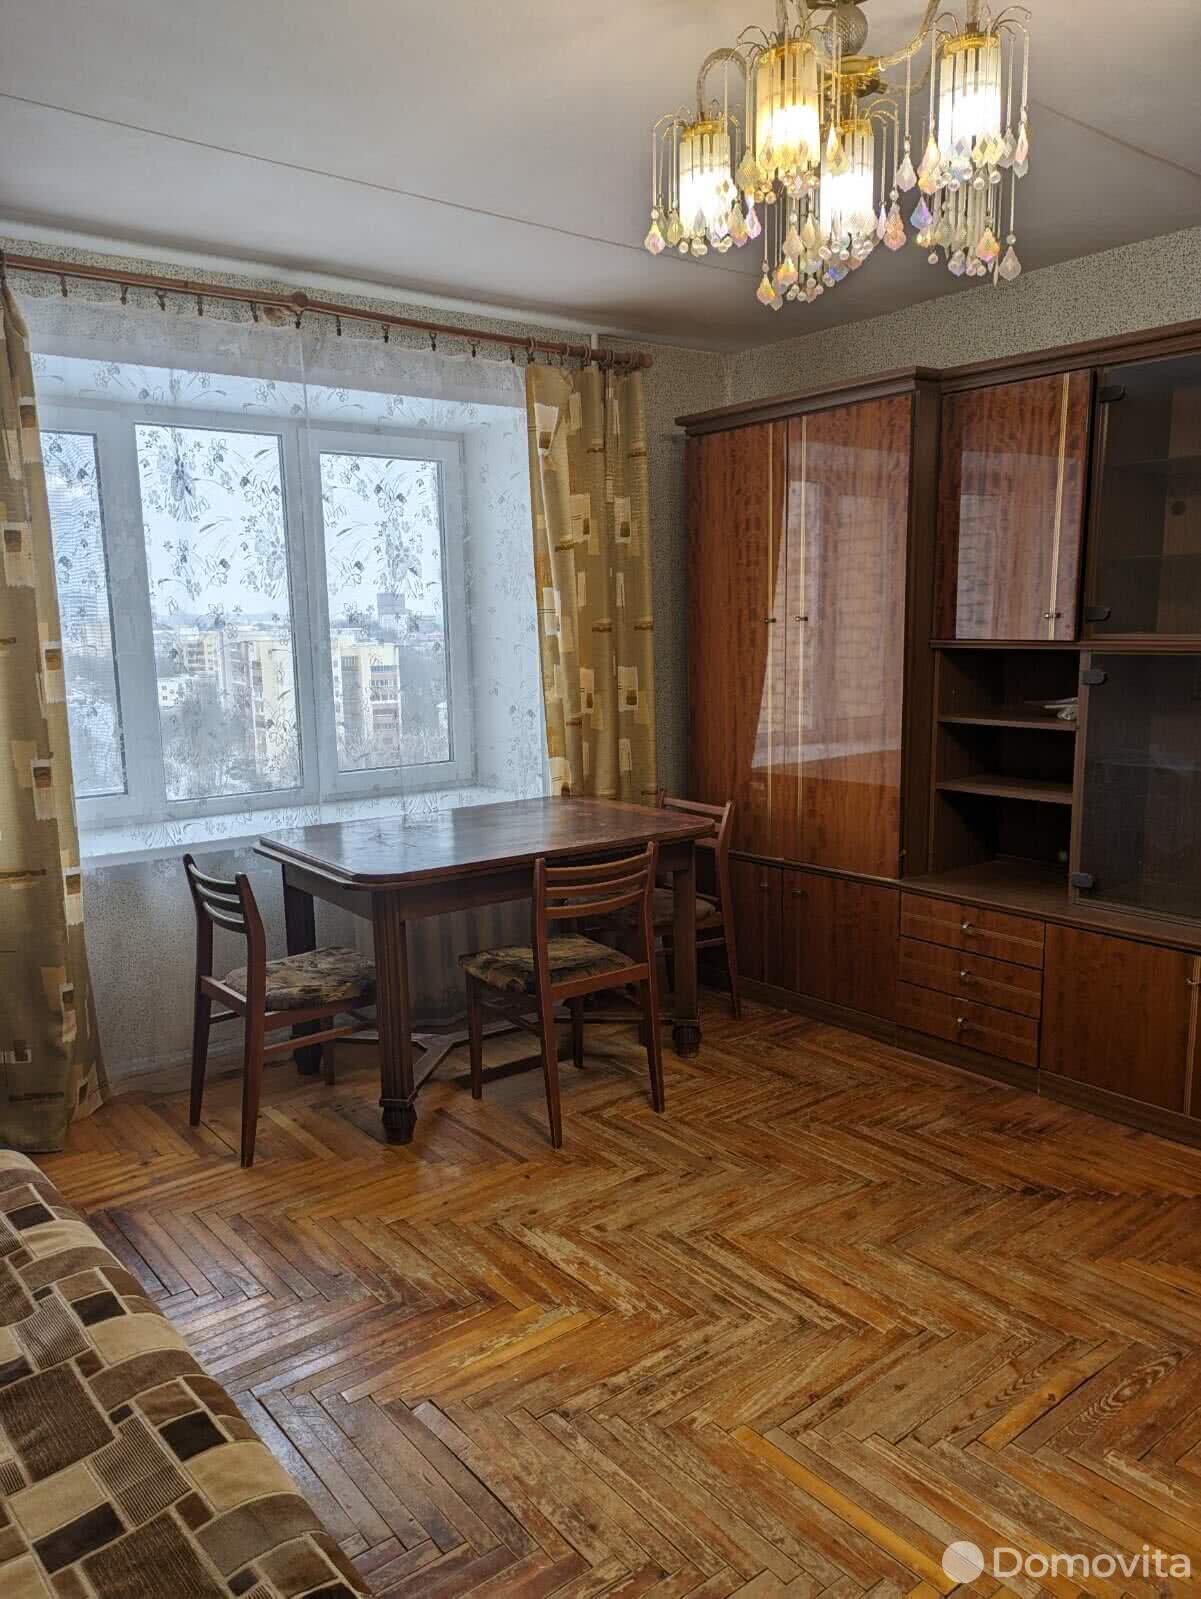 квартира, Минск, ул. Азгура, д. 5, стоимость продажи 279 887 р.